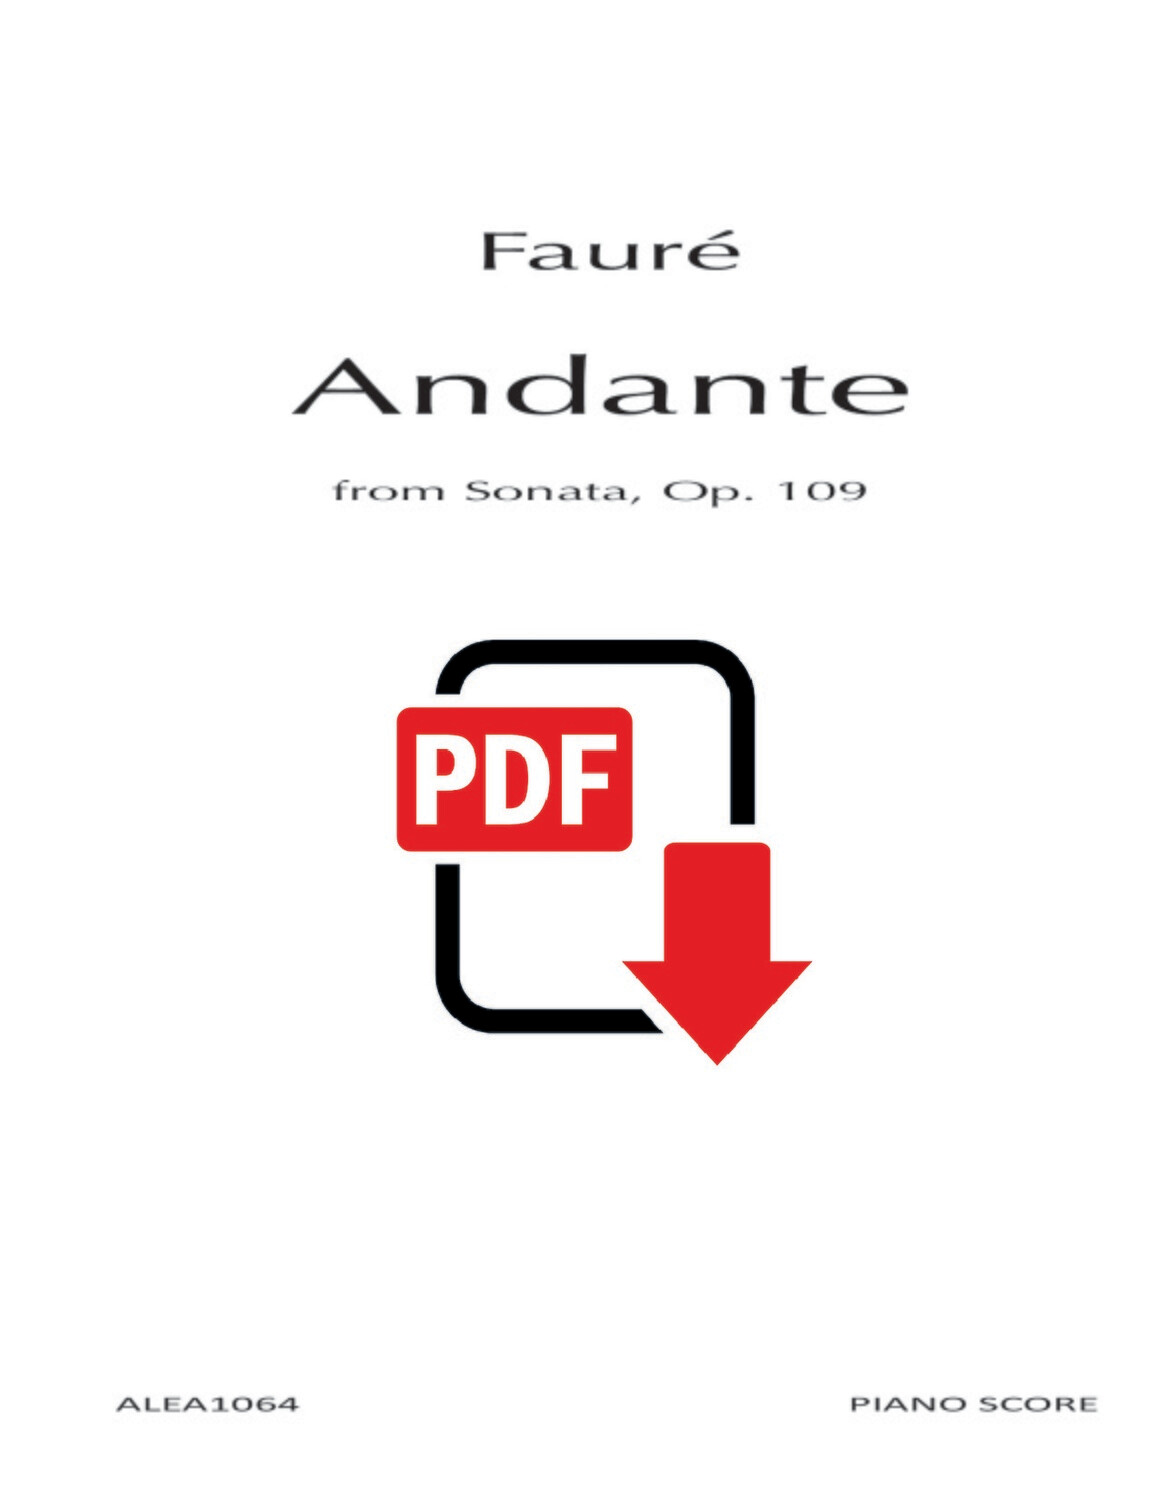 Faure: Andante from Sonata Op.109 (PDF)